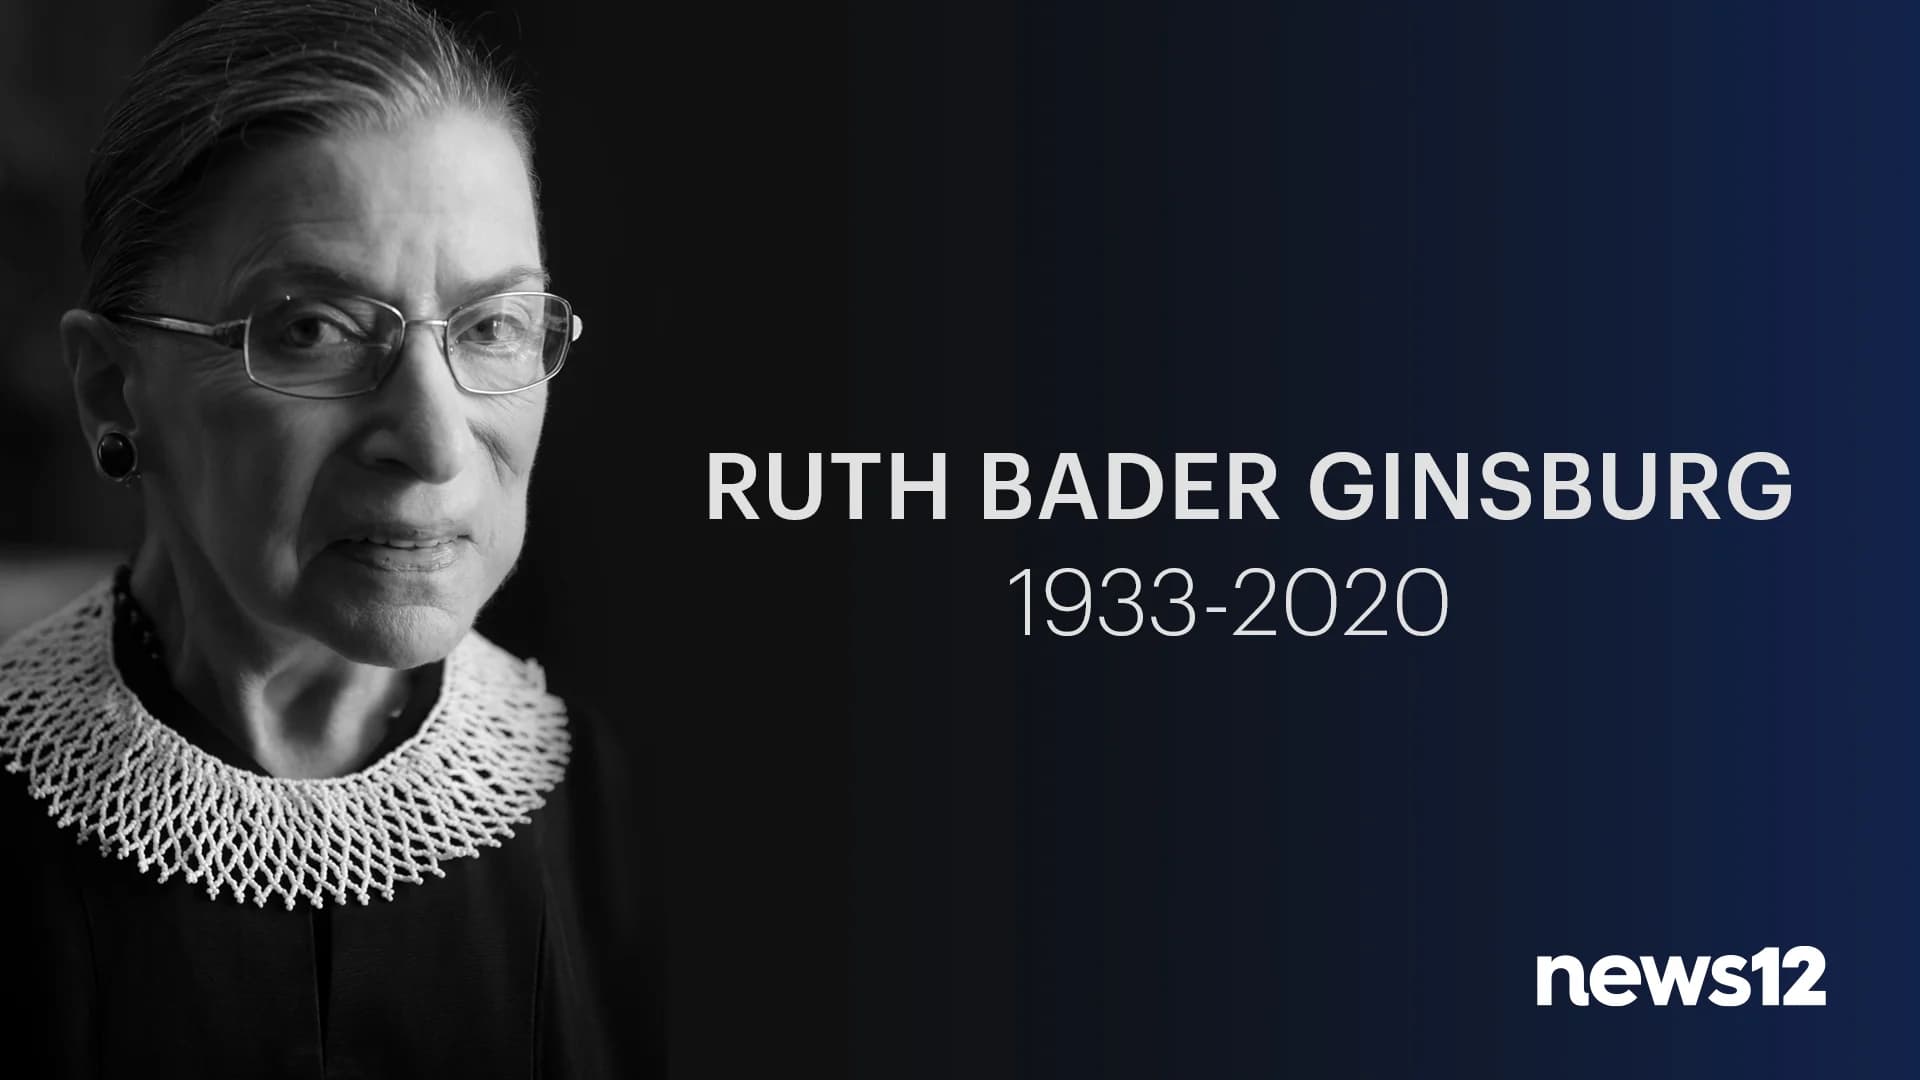 WATCH: Remembering Ruth Bader Ginsburg